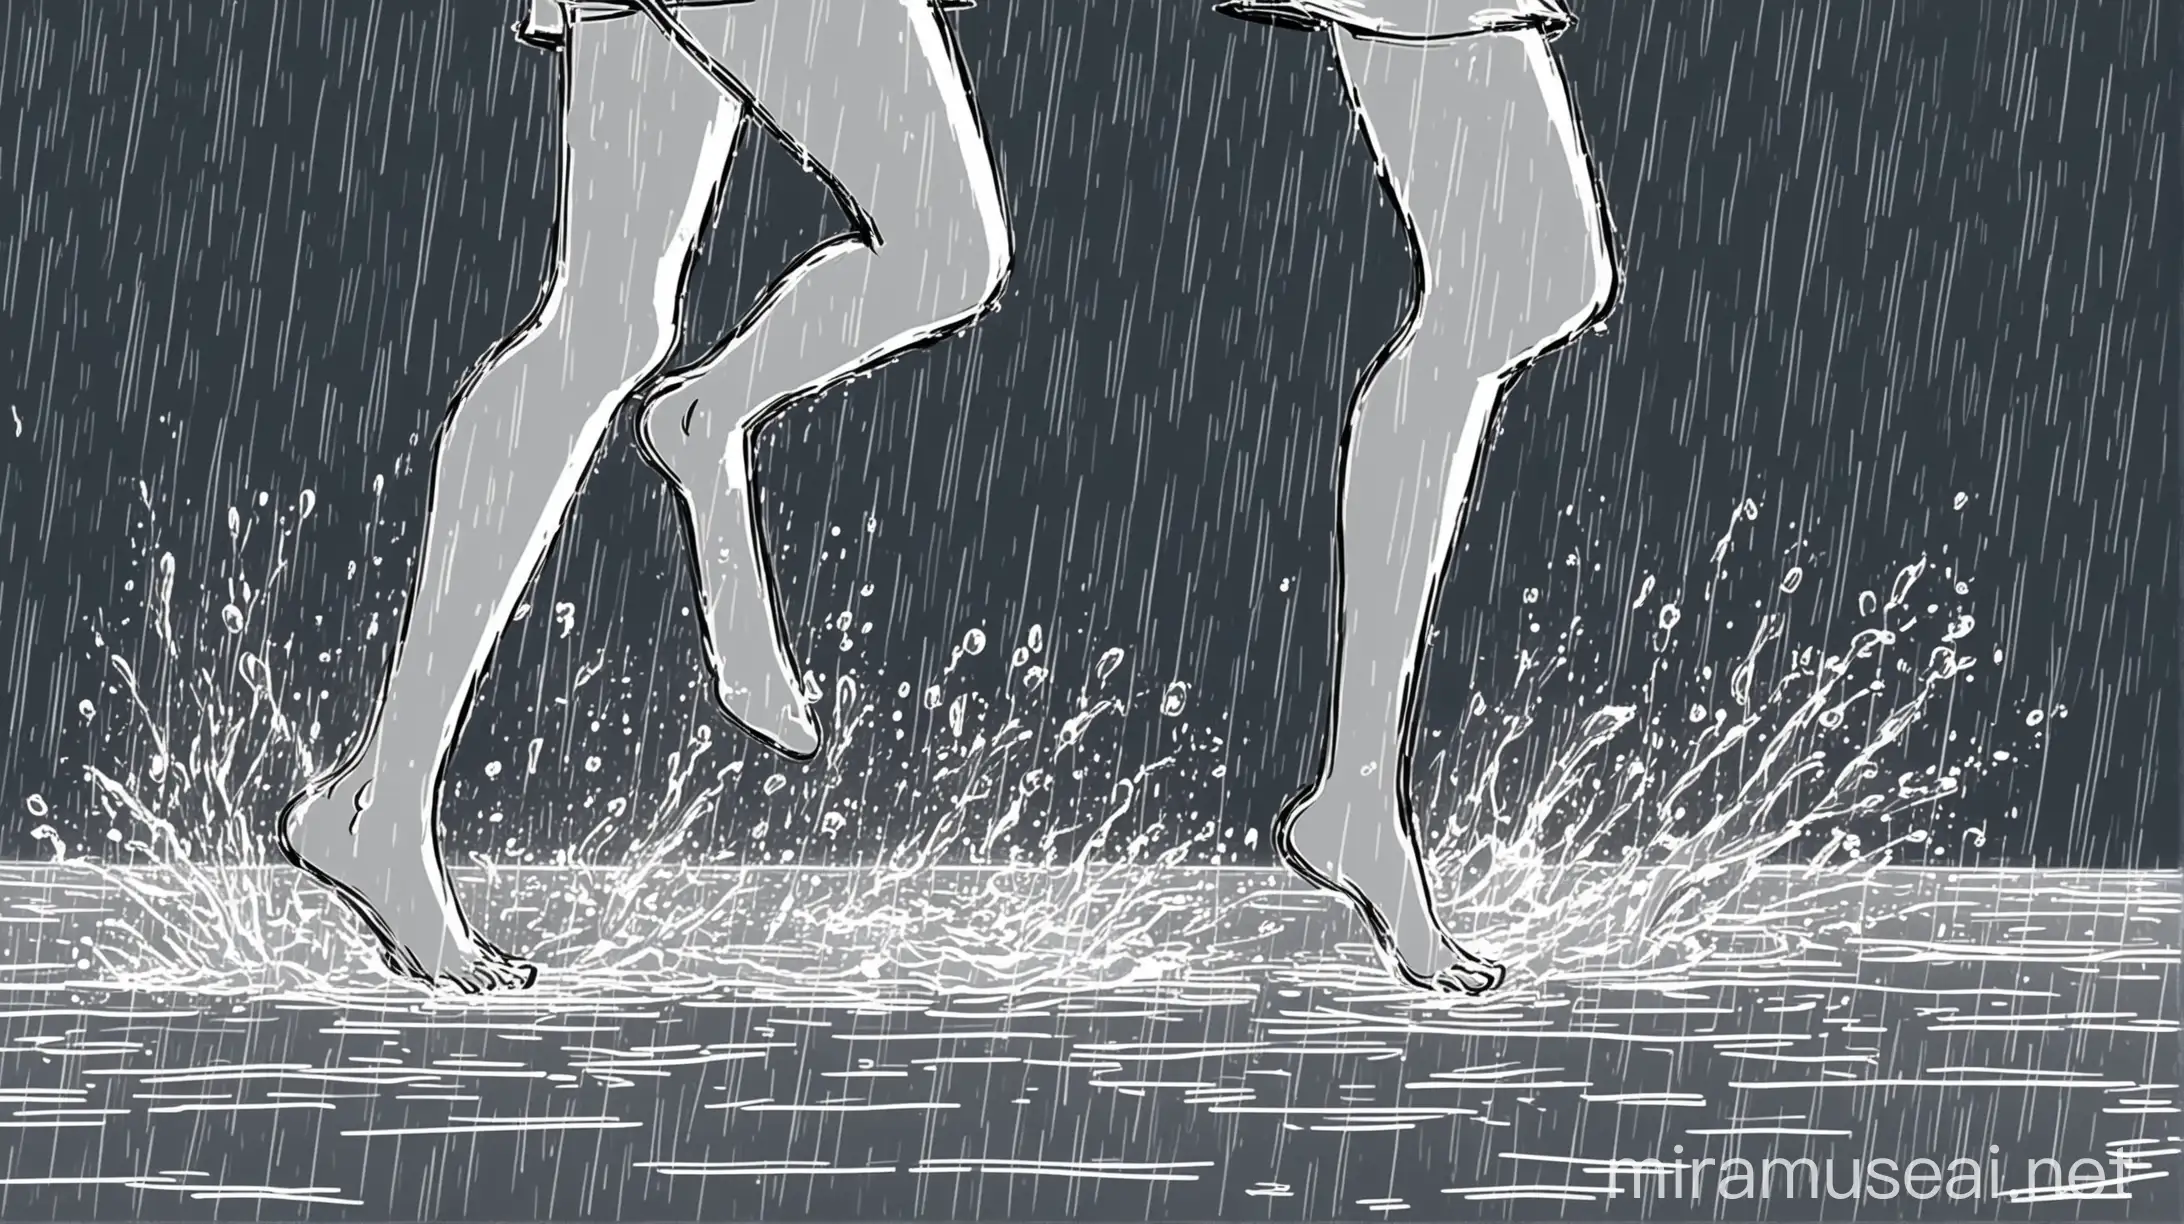 Girl Running in Rainy Night Animated Cartoon Sketch with Splashing Water